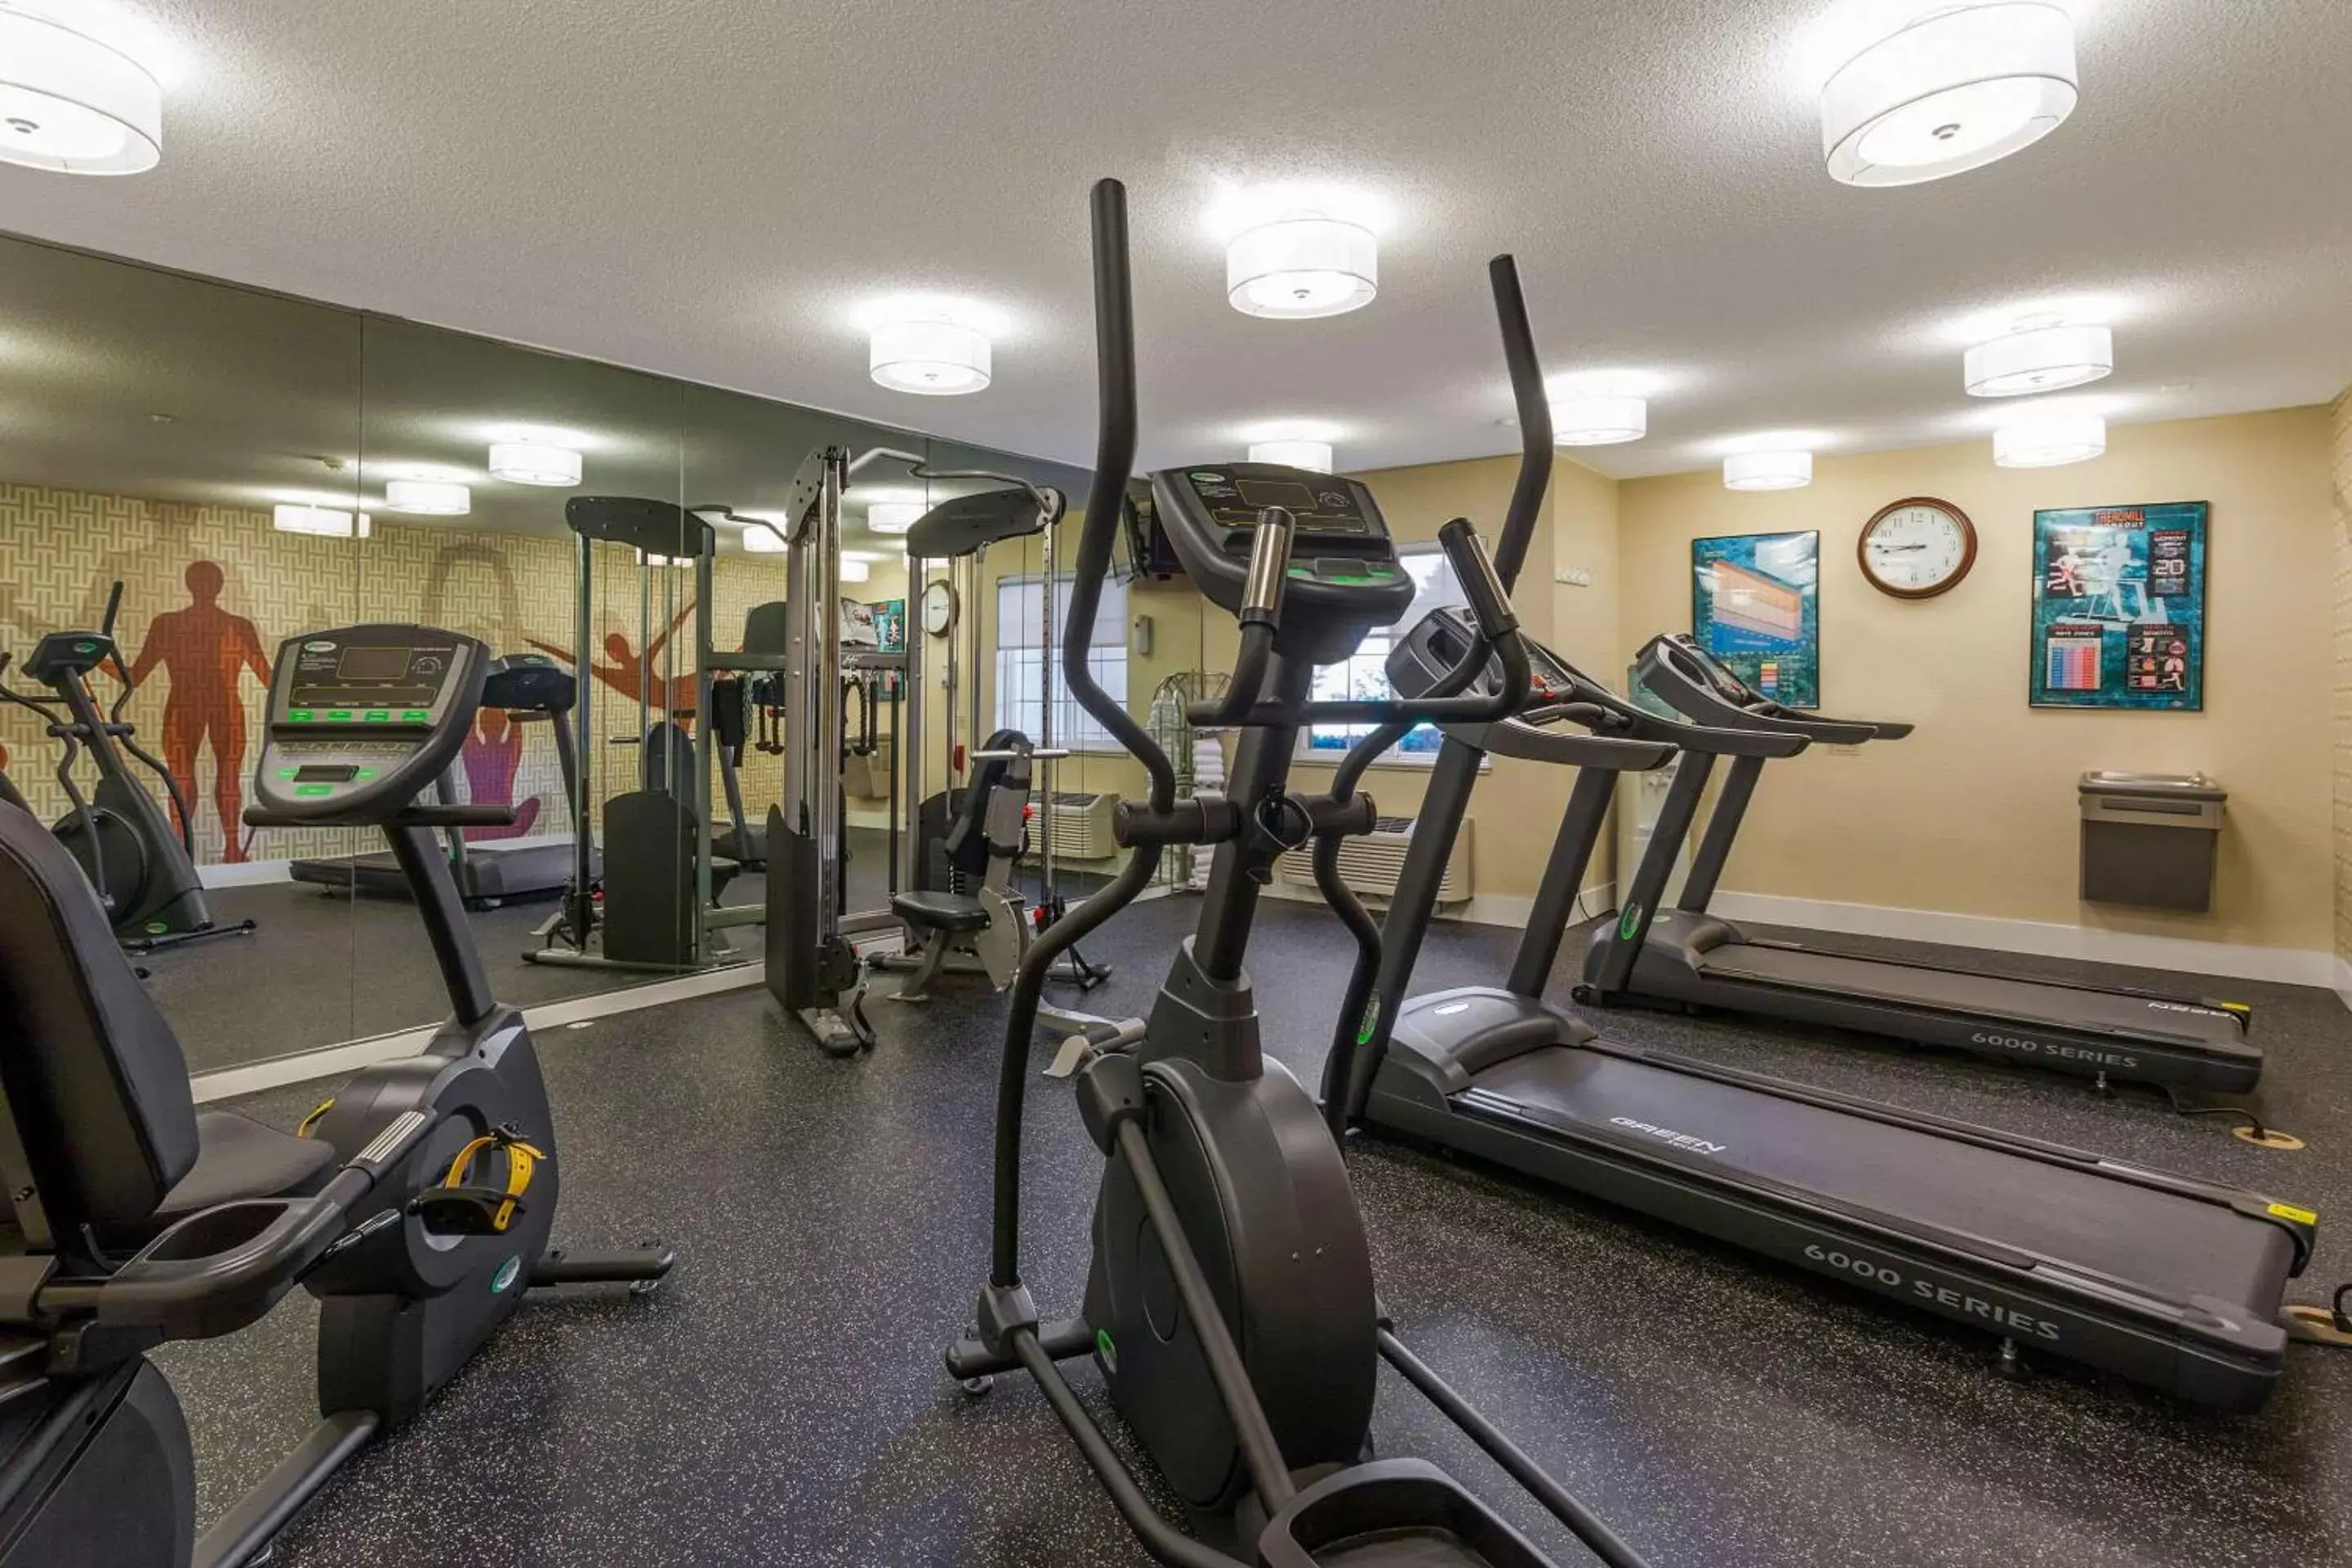 Fitness centre/facilities, Fitness Center/Facilities in MainStay Suites Detroit Farmington Hills